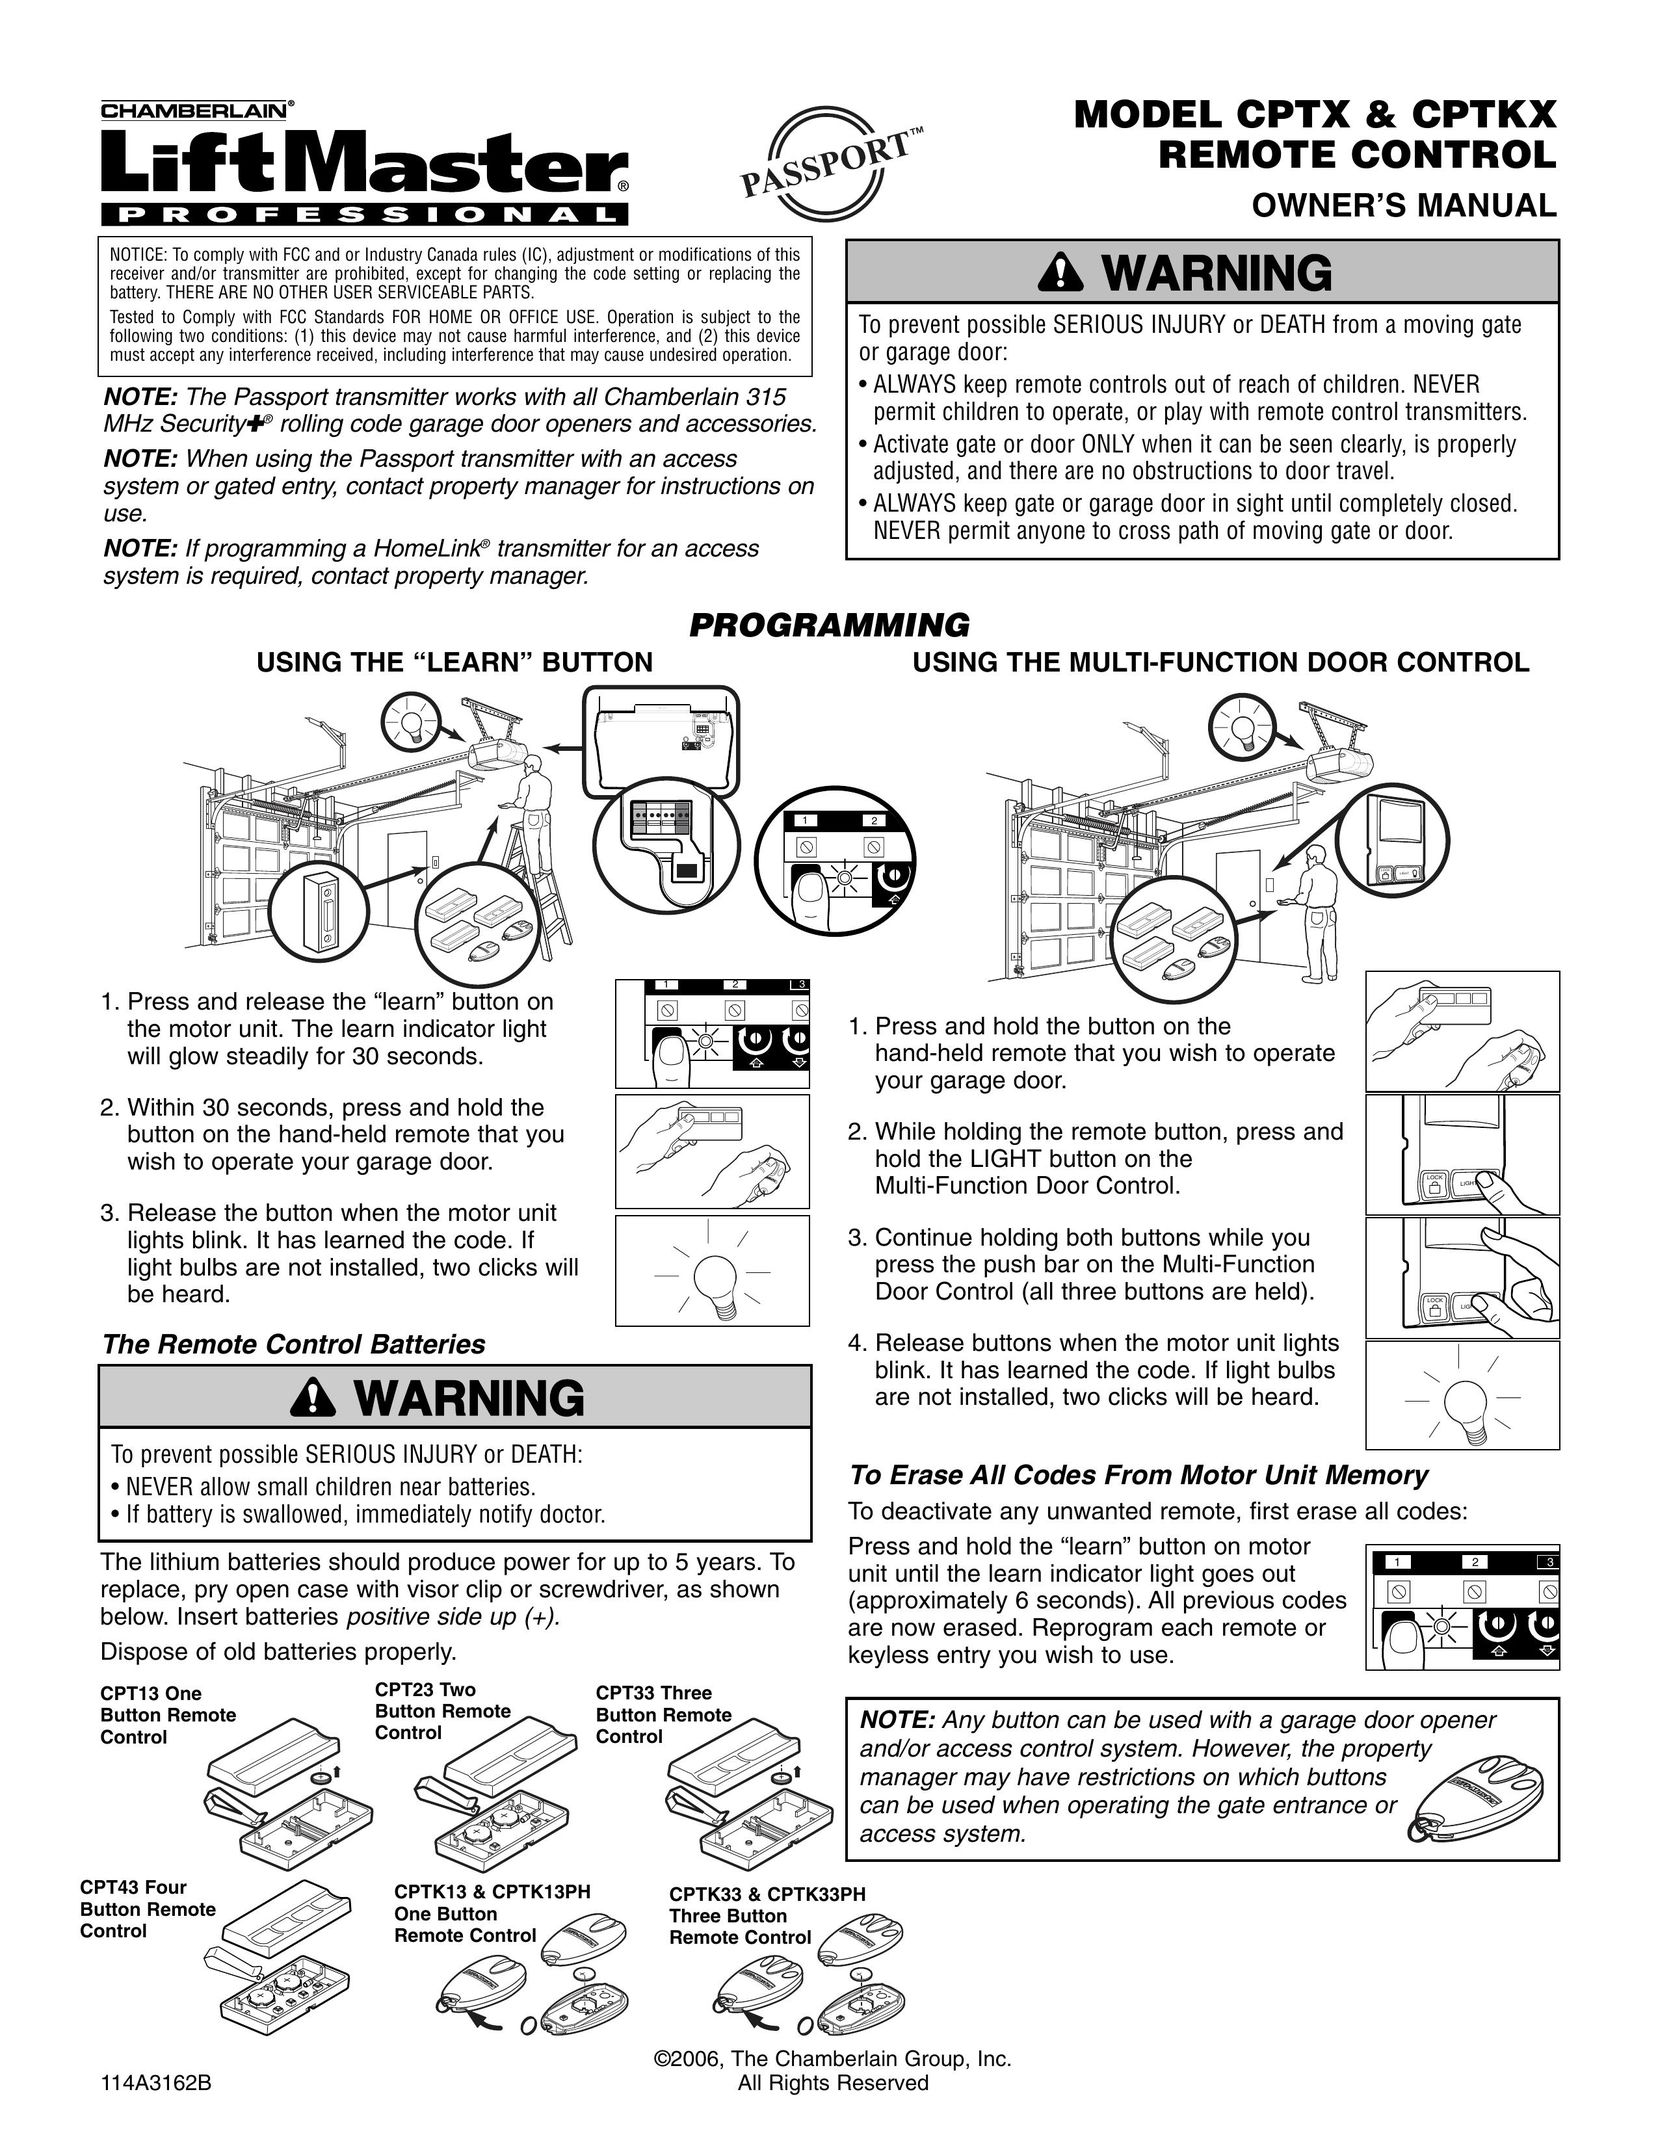 Chamberlain CPTX Universal Remote User Manual